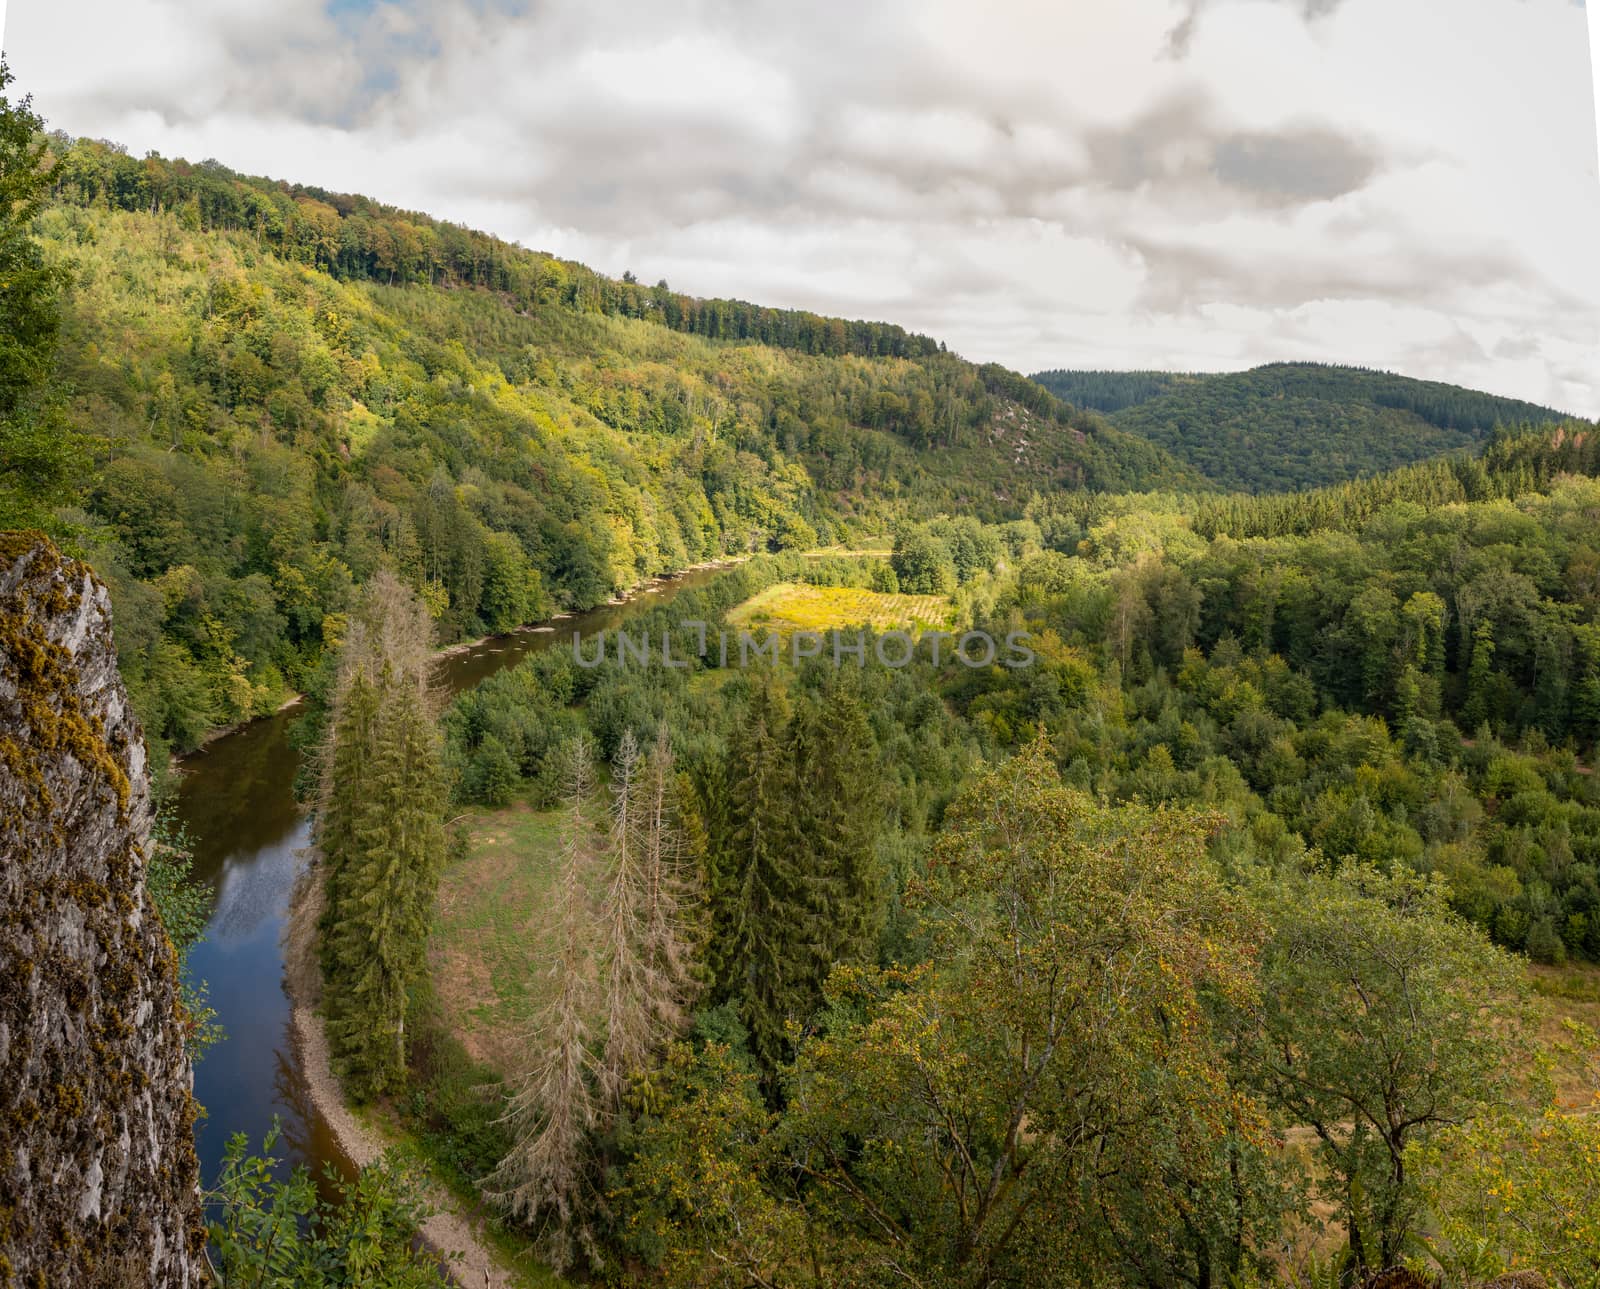 Landscape and scenery during Les Echelles de Rochehaut hike in region Bouillon, Wallonia, Belgium